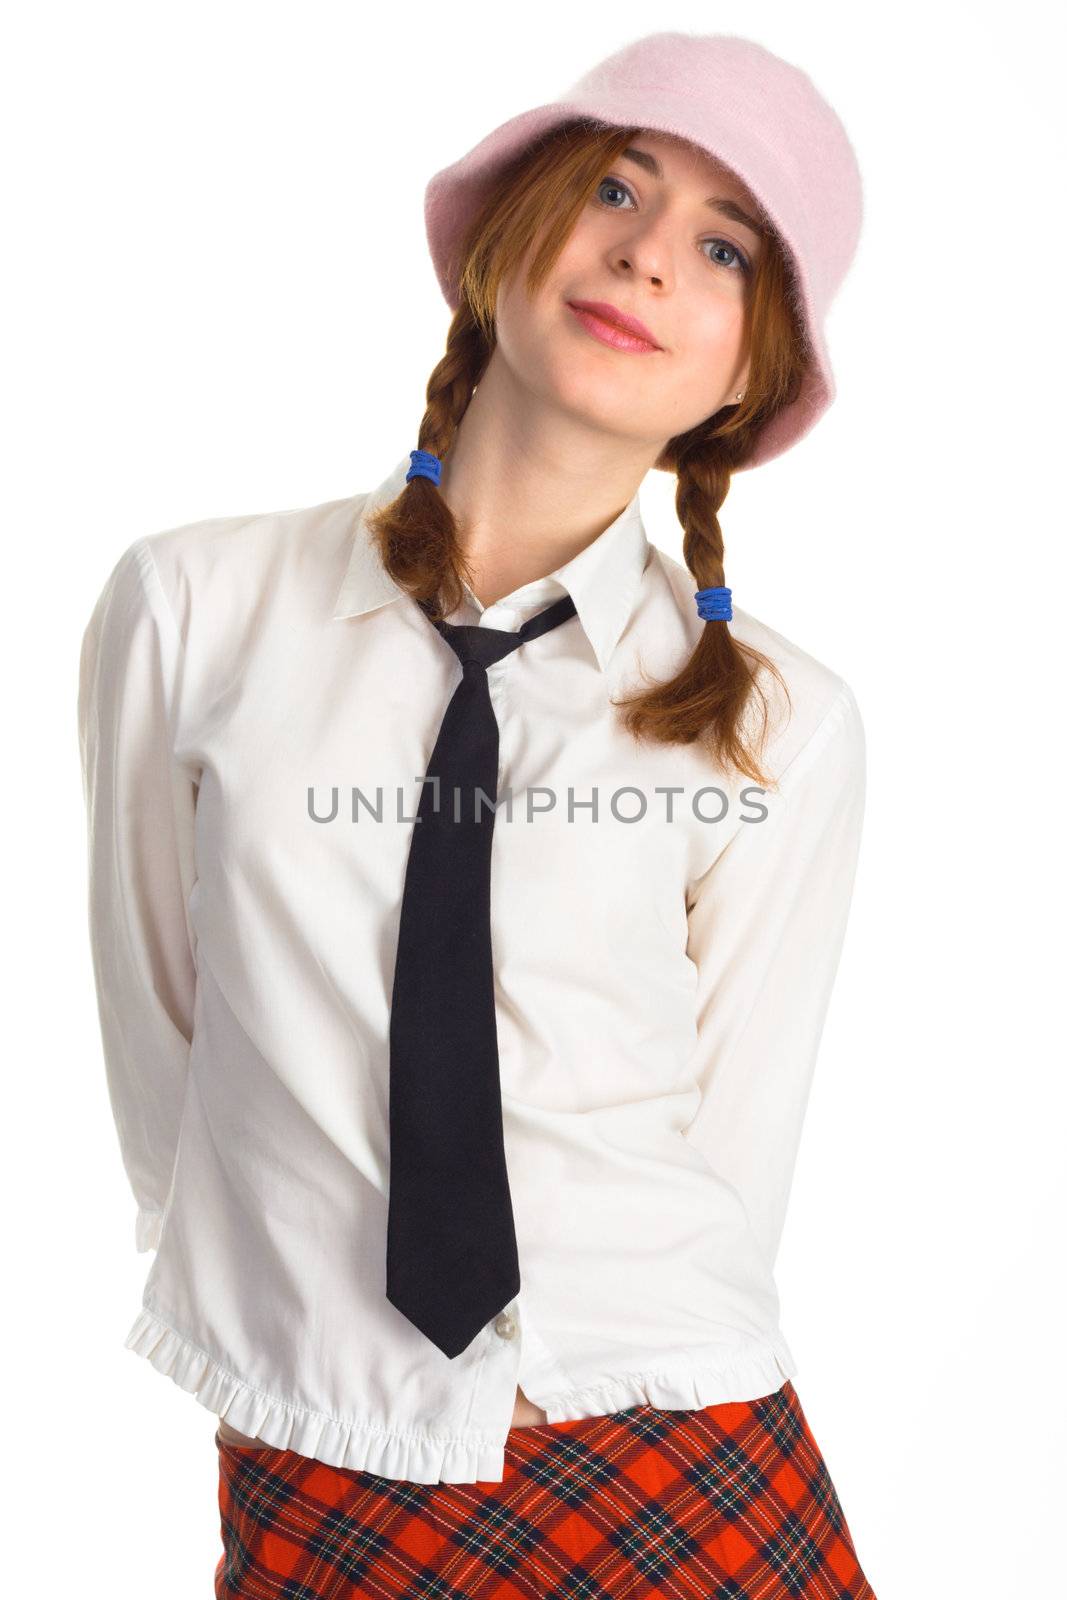 Sexy girl with a tie by Gdolgikh